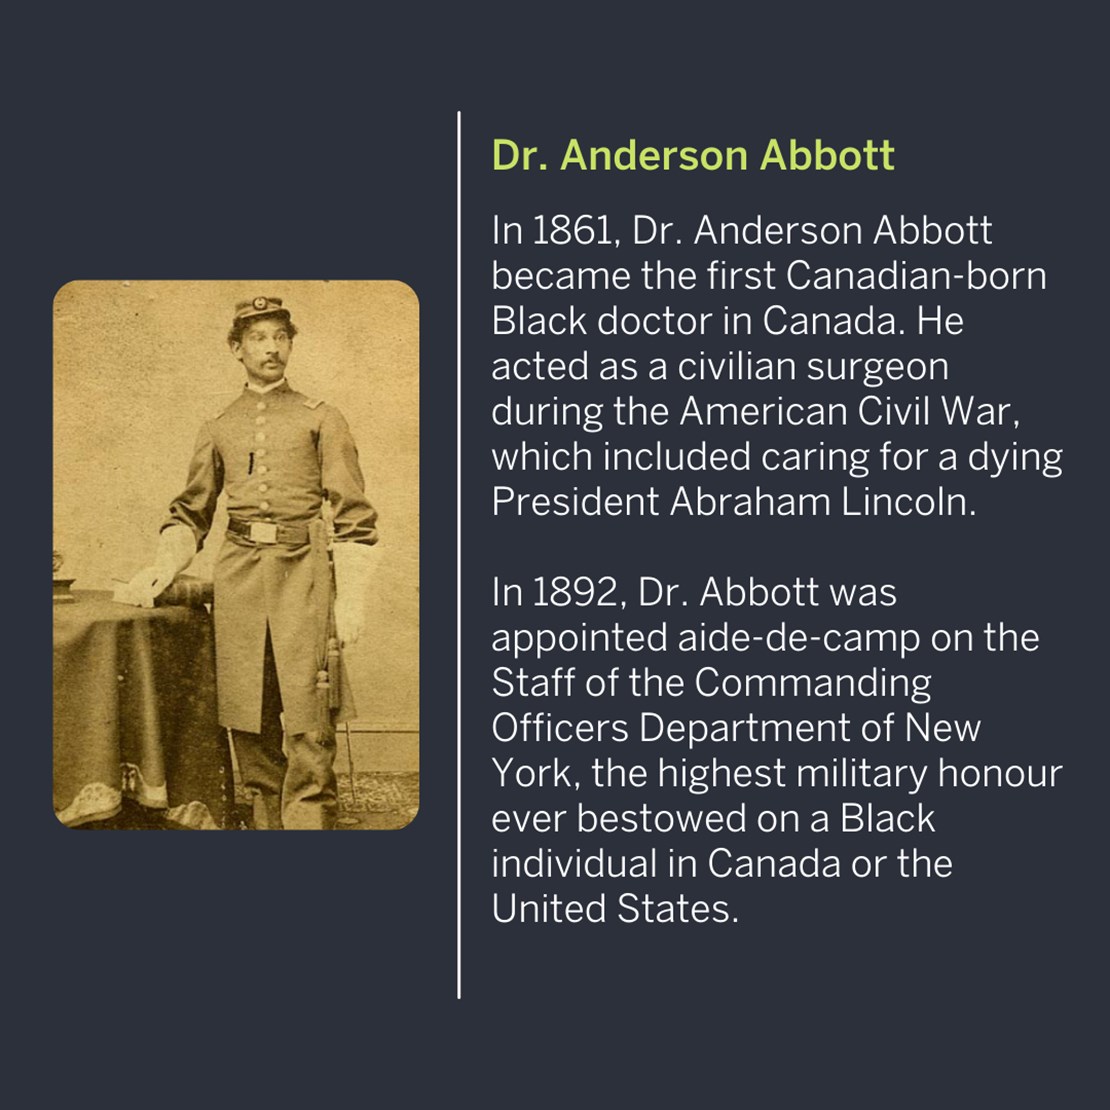 Dr. Anderson Abbott